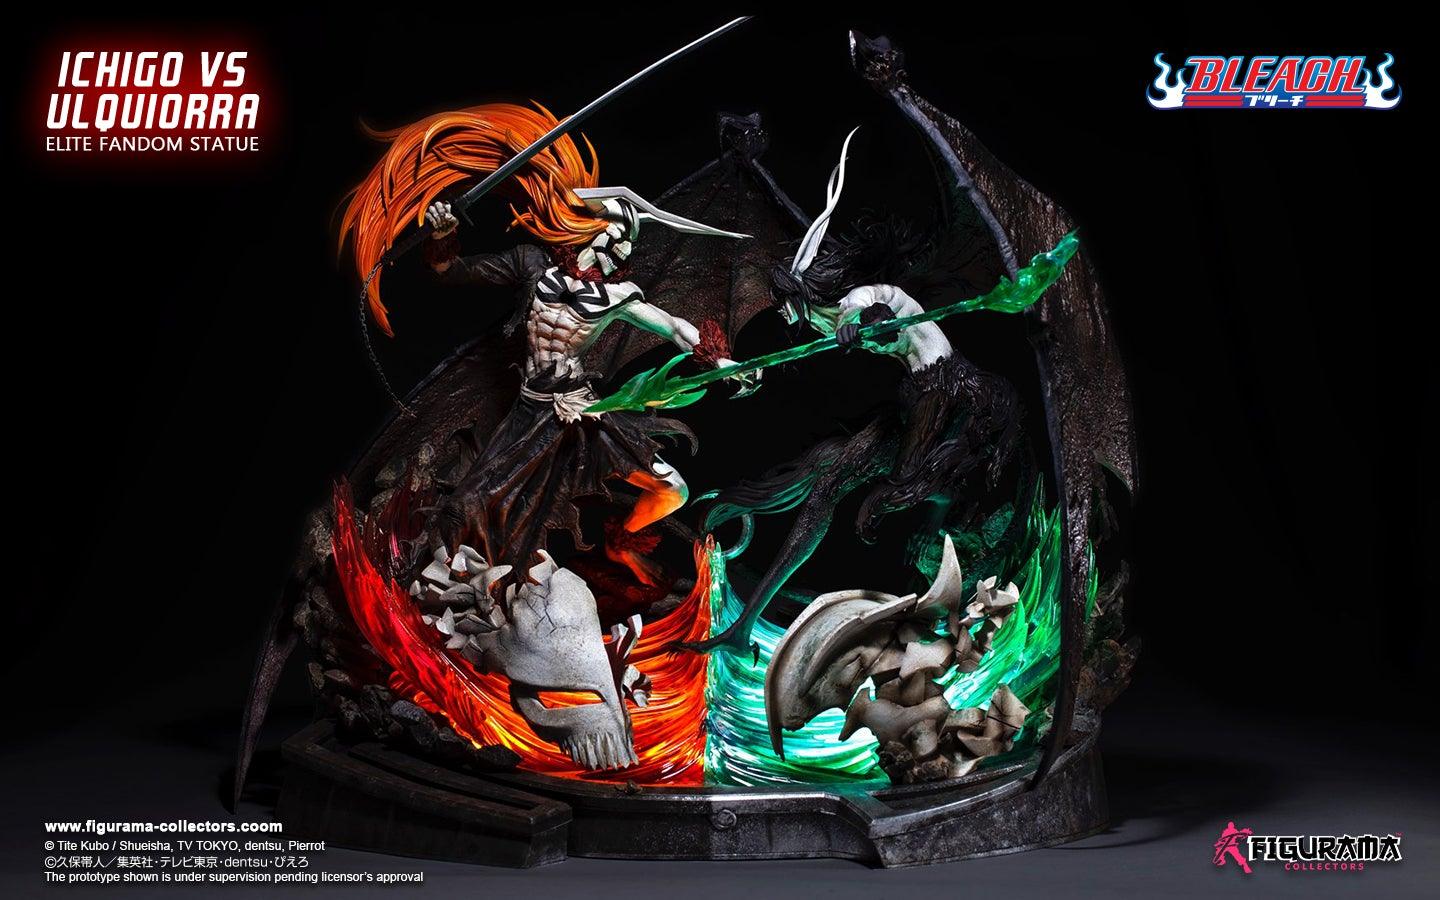 Bleach- Ichigo vs Ulquiorra Elite Fandom Statue- Deposit Resin Figures Figurama Collectors 